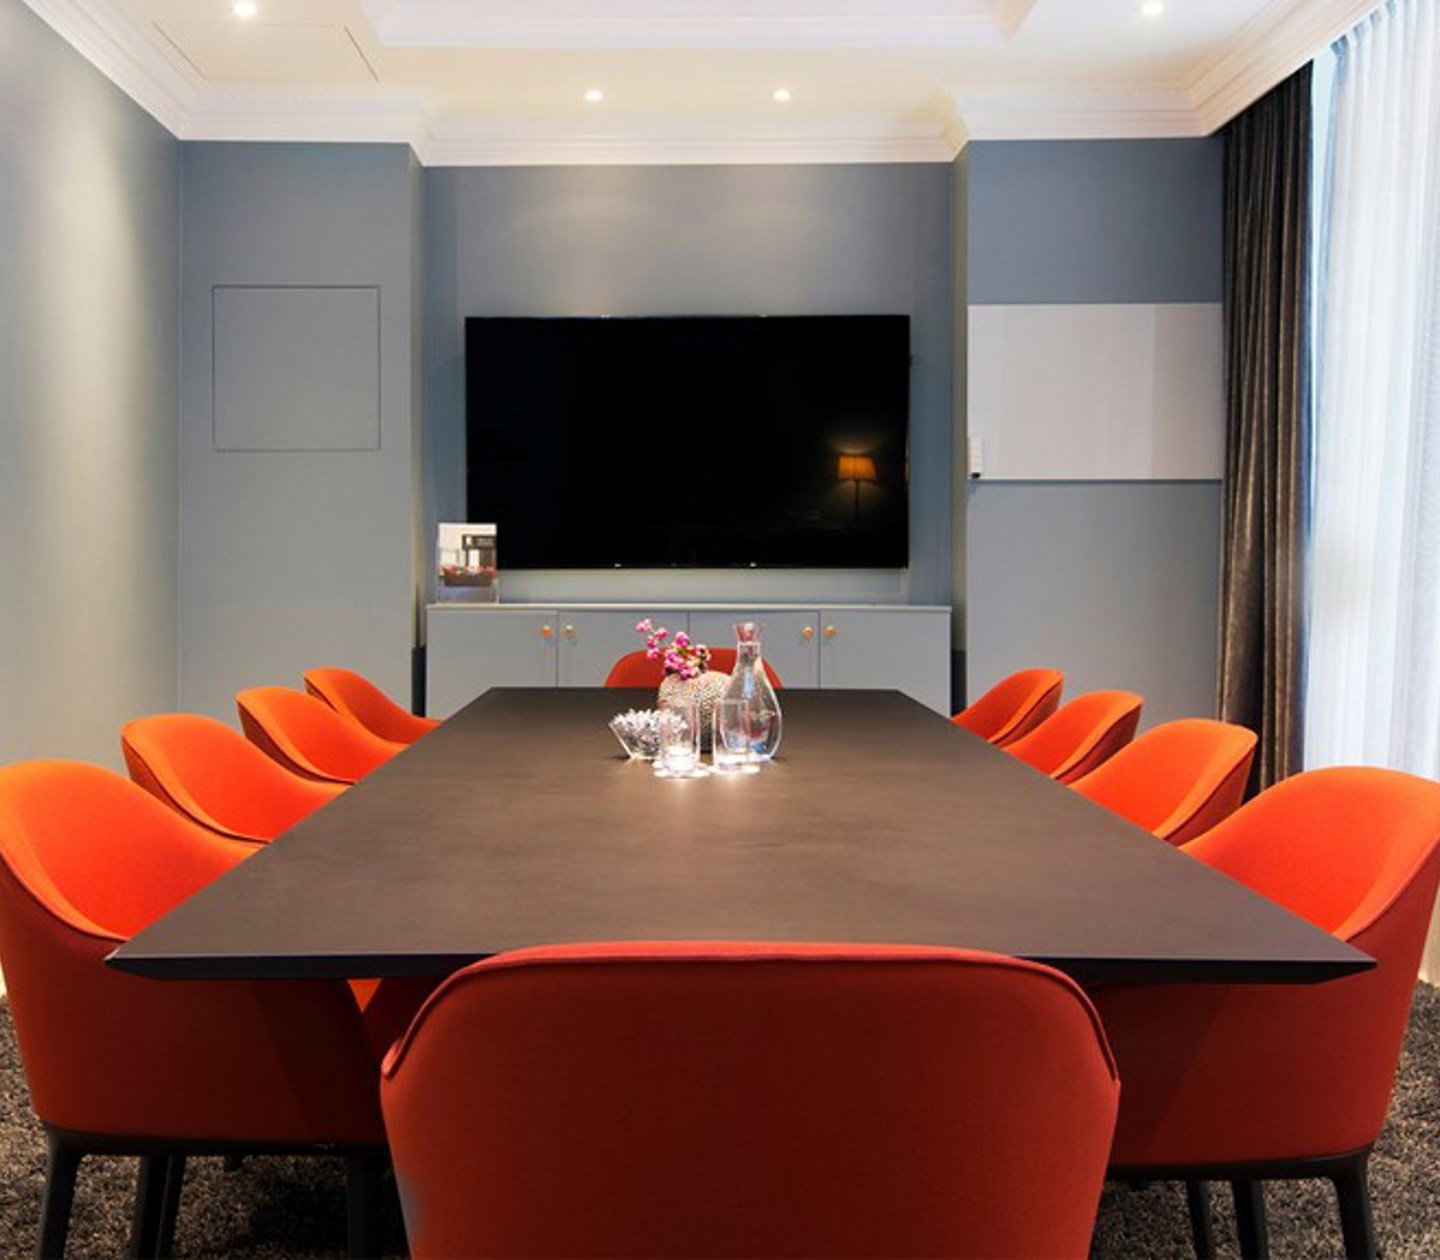 Konferensrum med orangea stolar